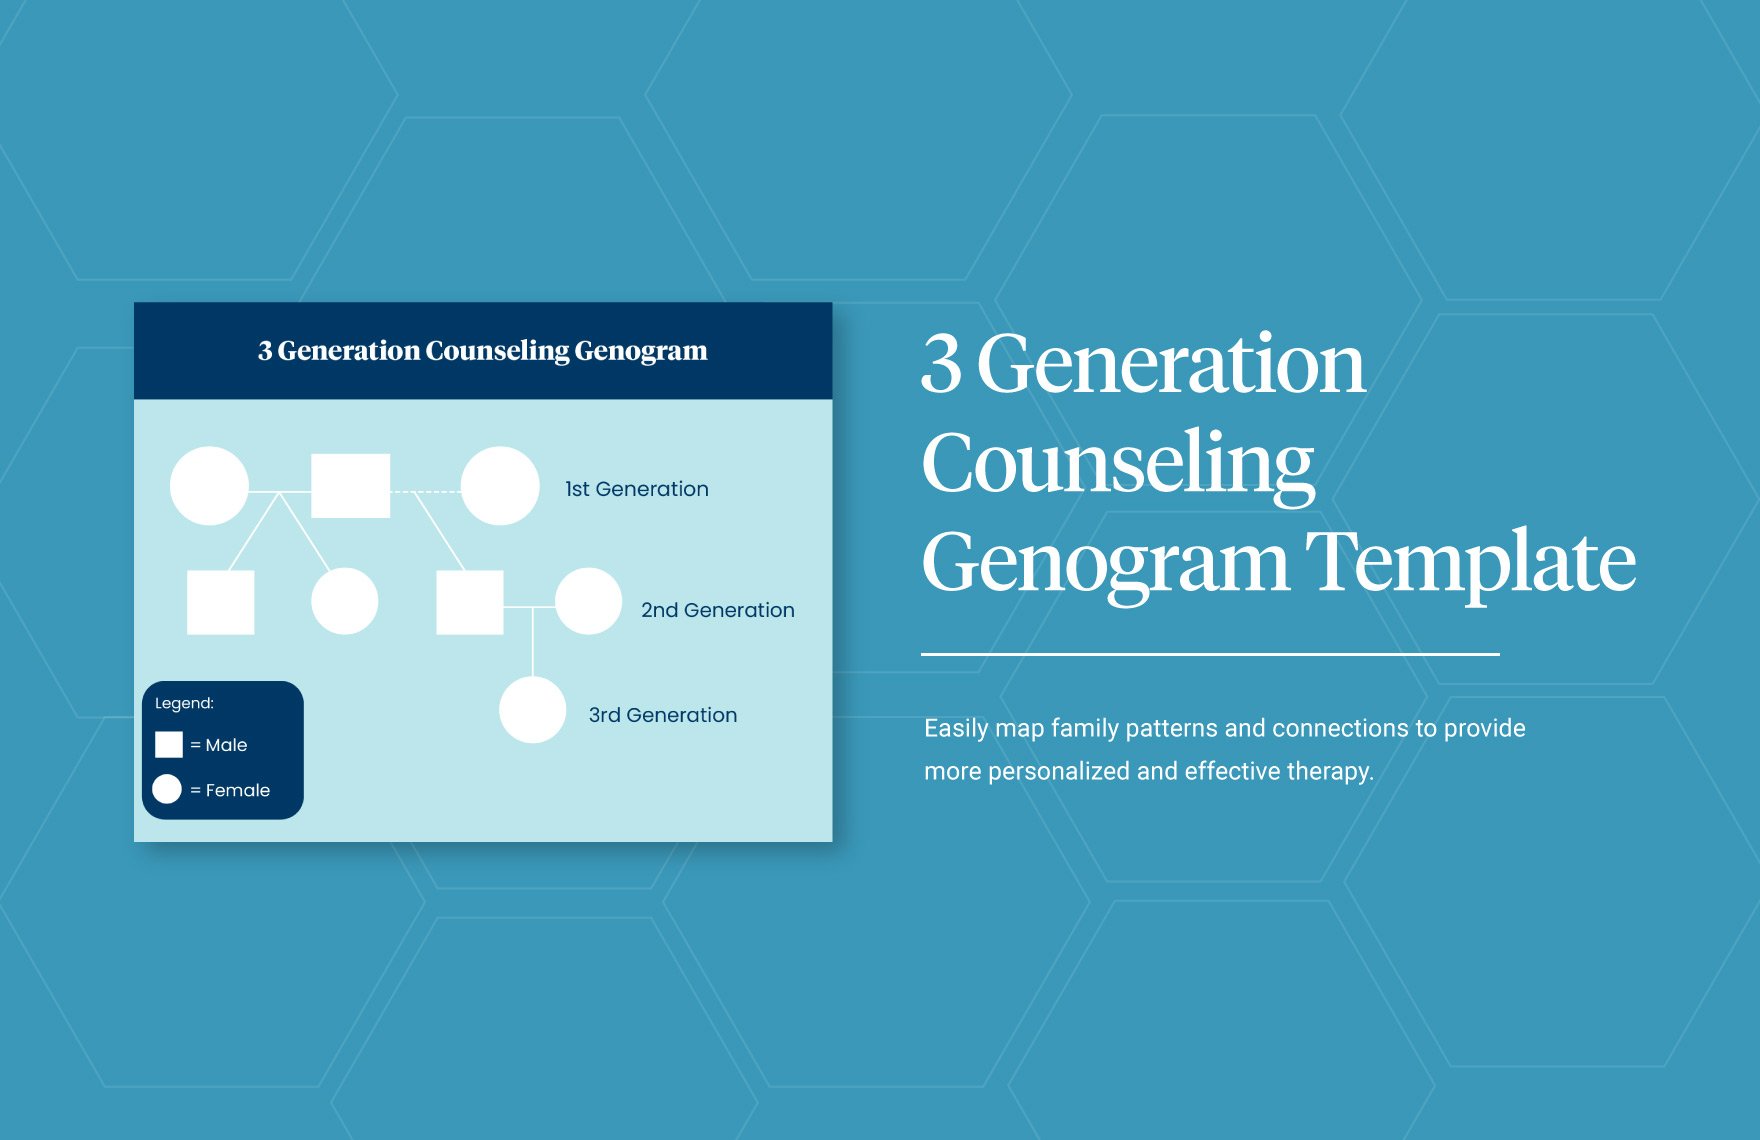 3 Generation Counseling Genogram Template